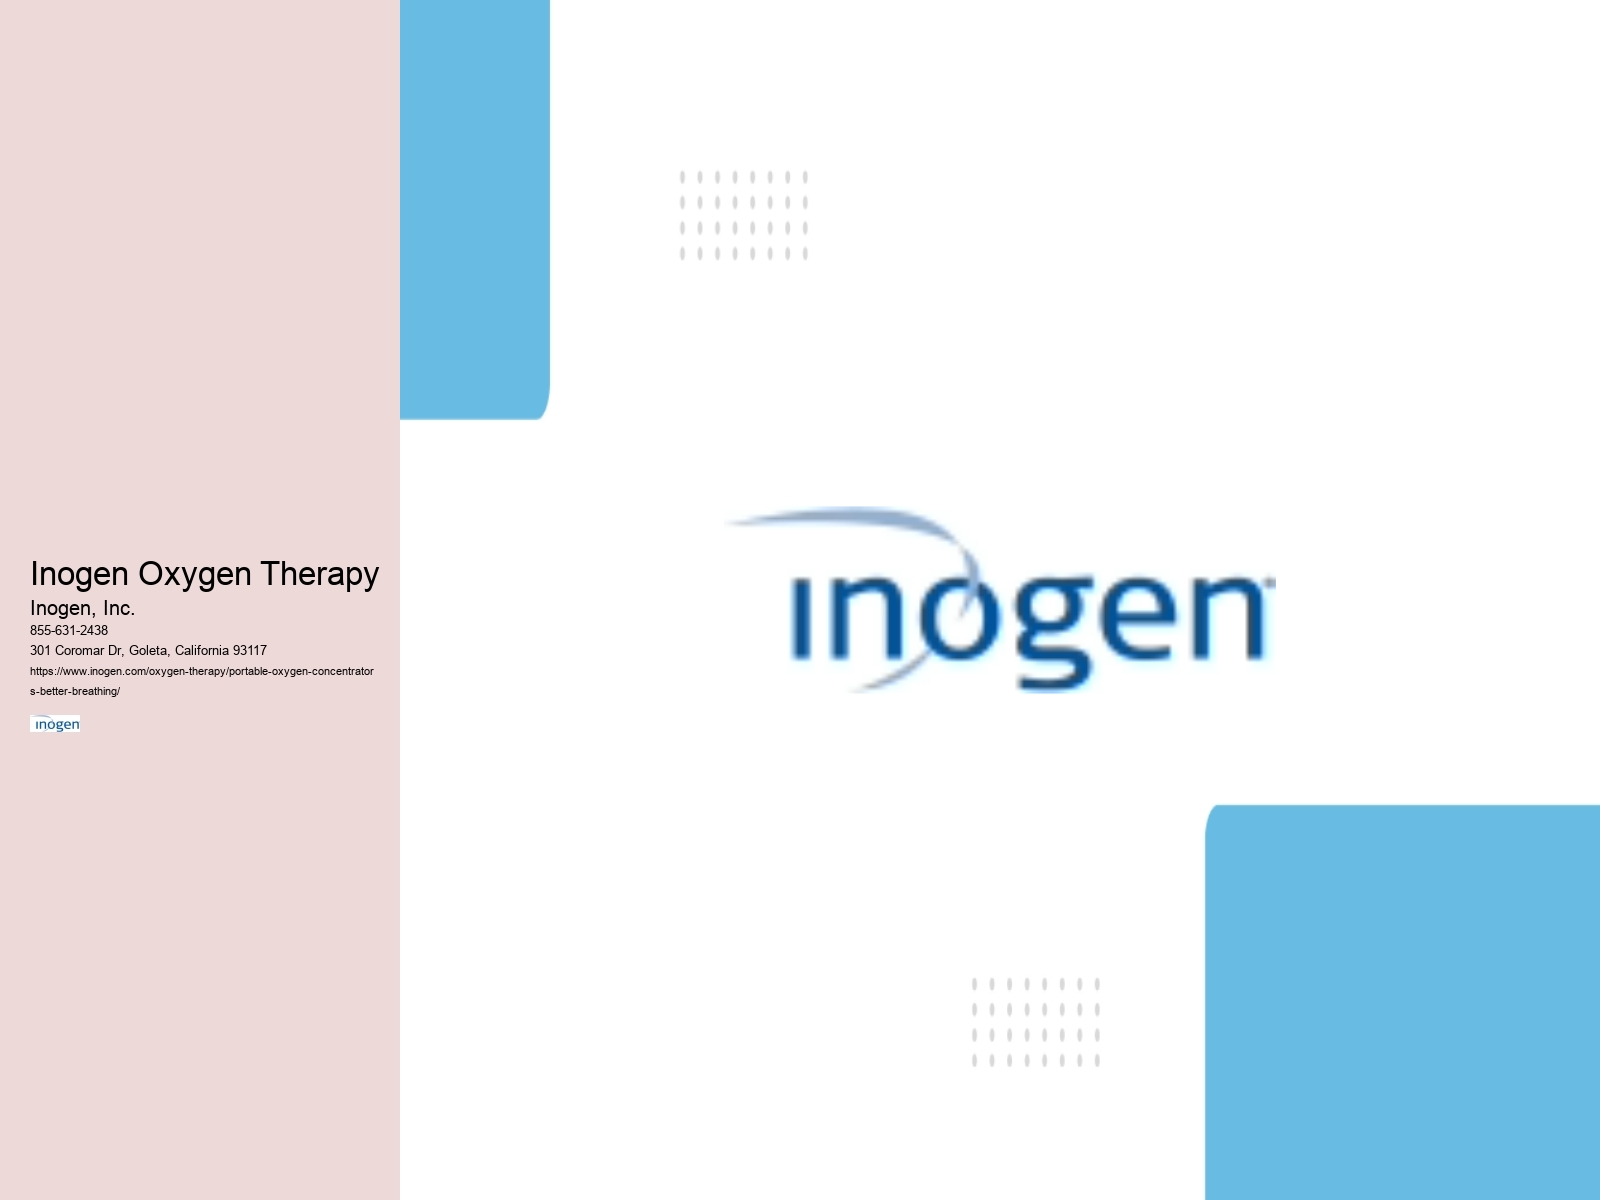 Inogen Oxygen Therapy